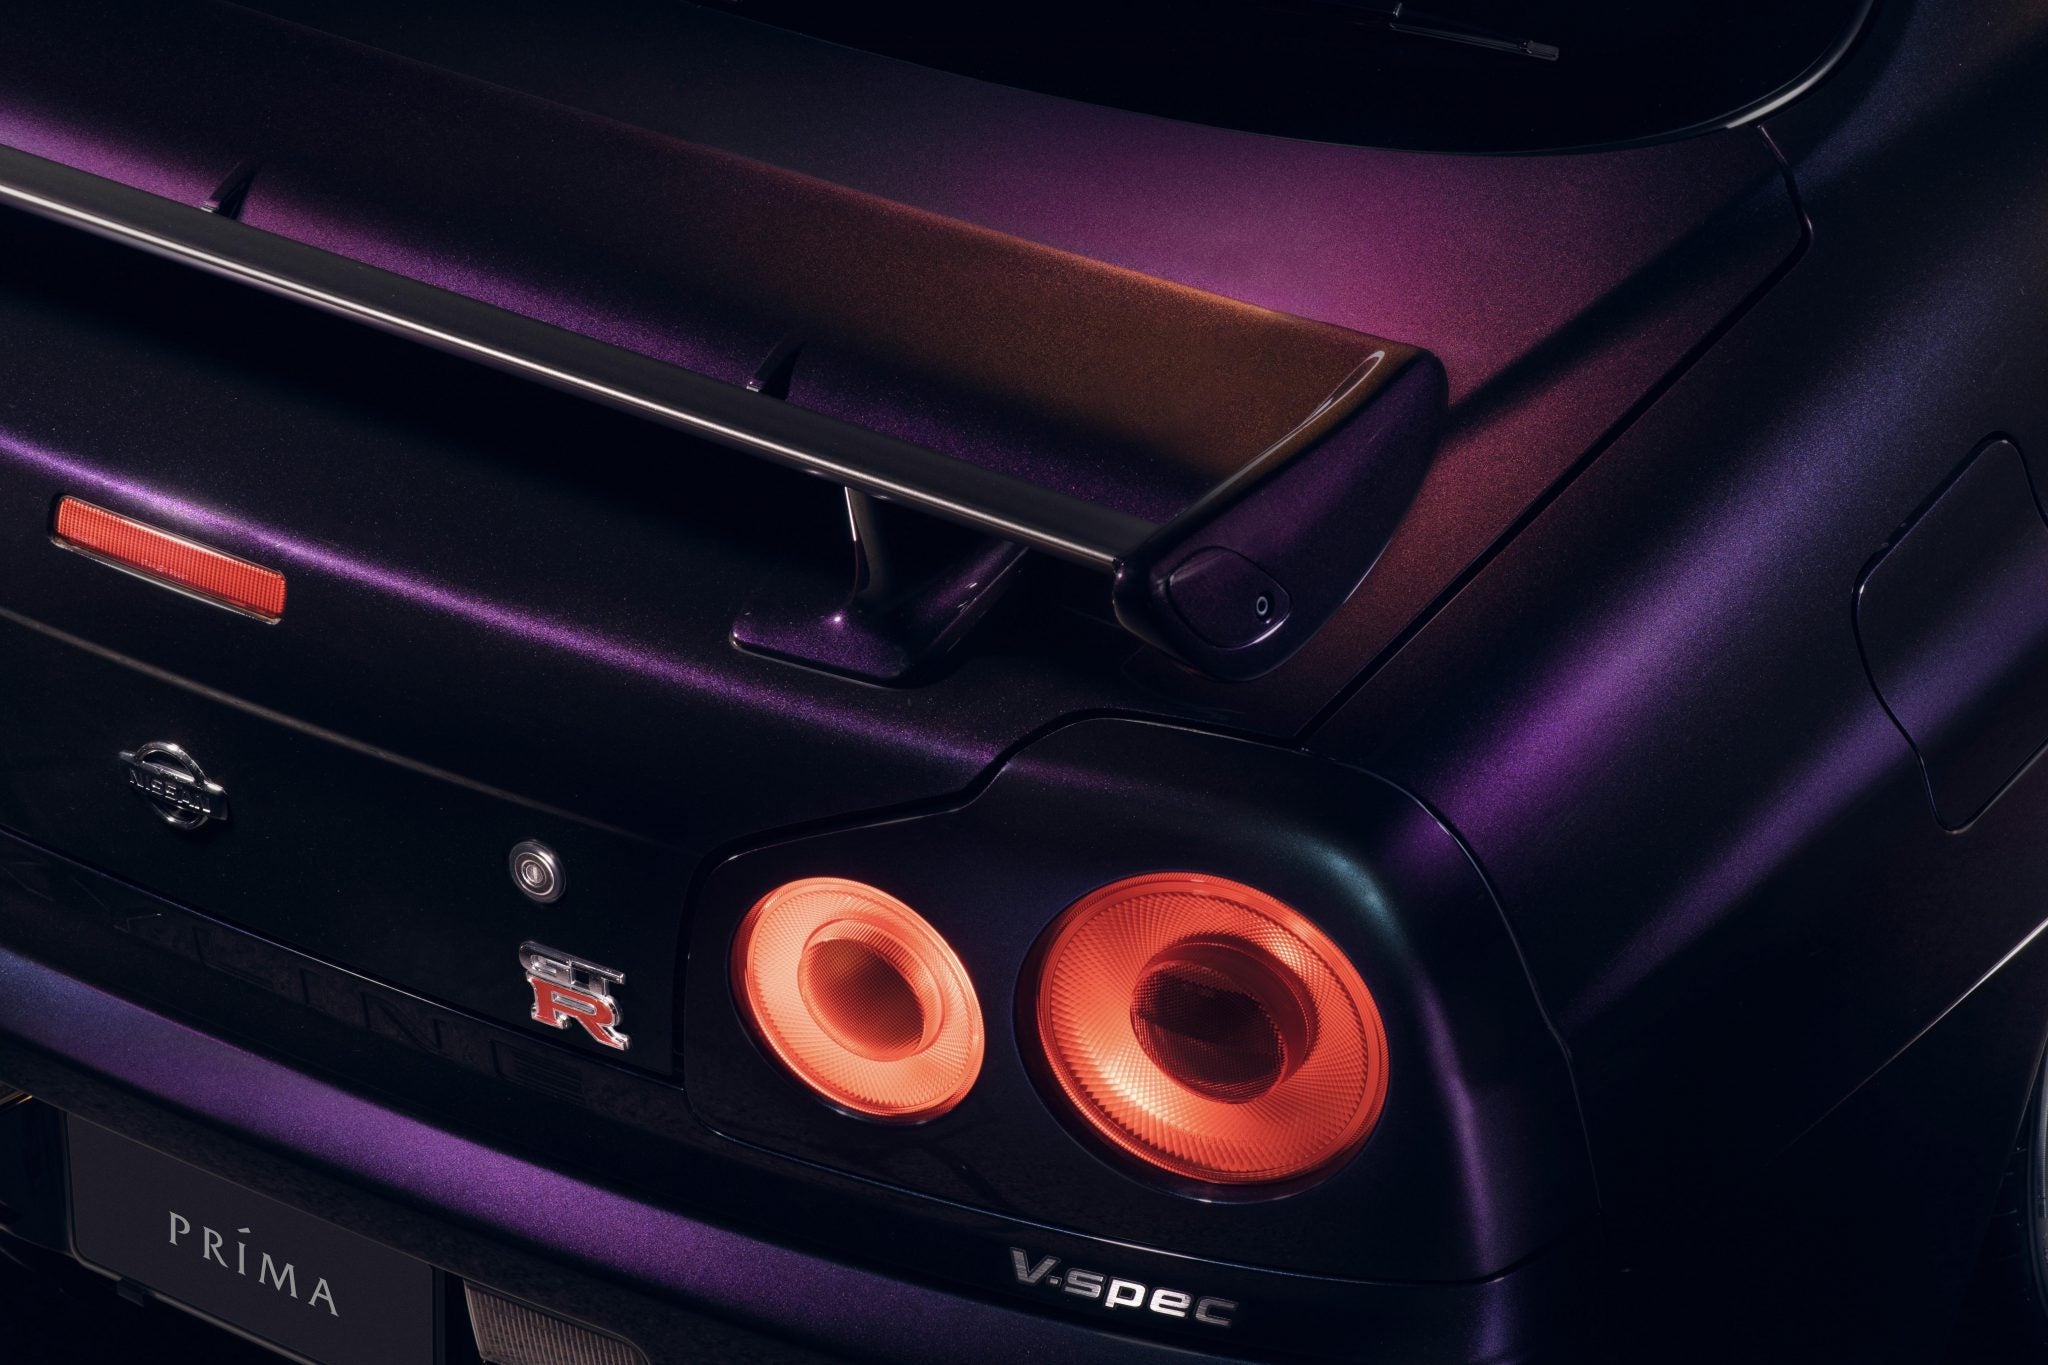 Midnight Purple R34 GT-R On Bring A Trailer Is The Stuff Of Gran Turismo Legend